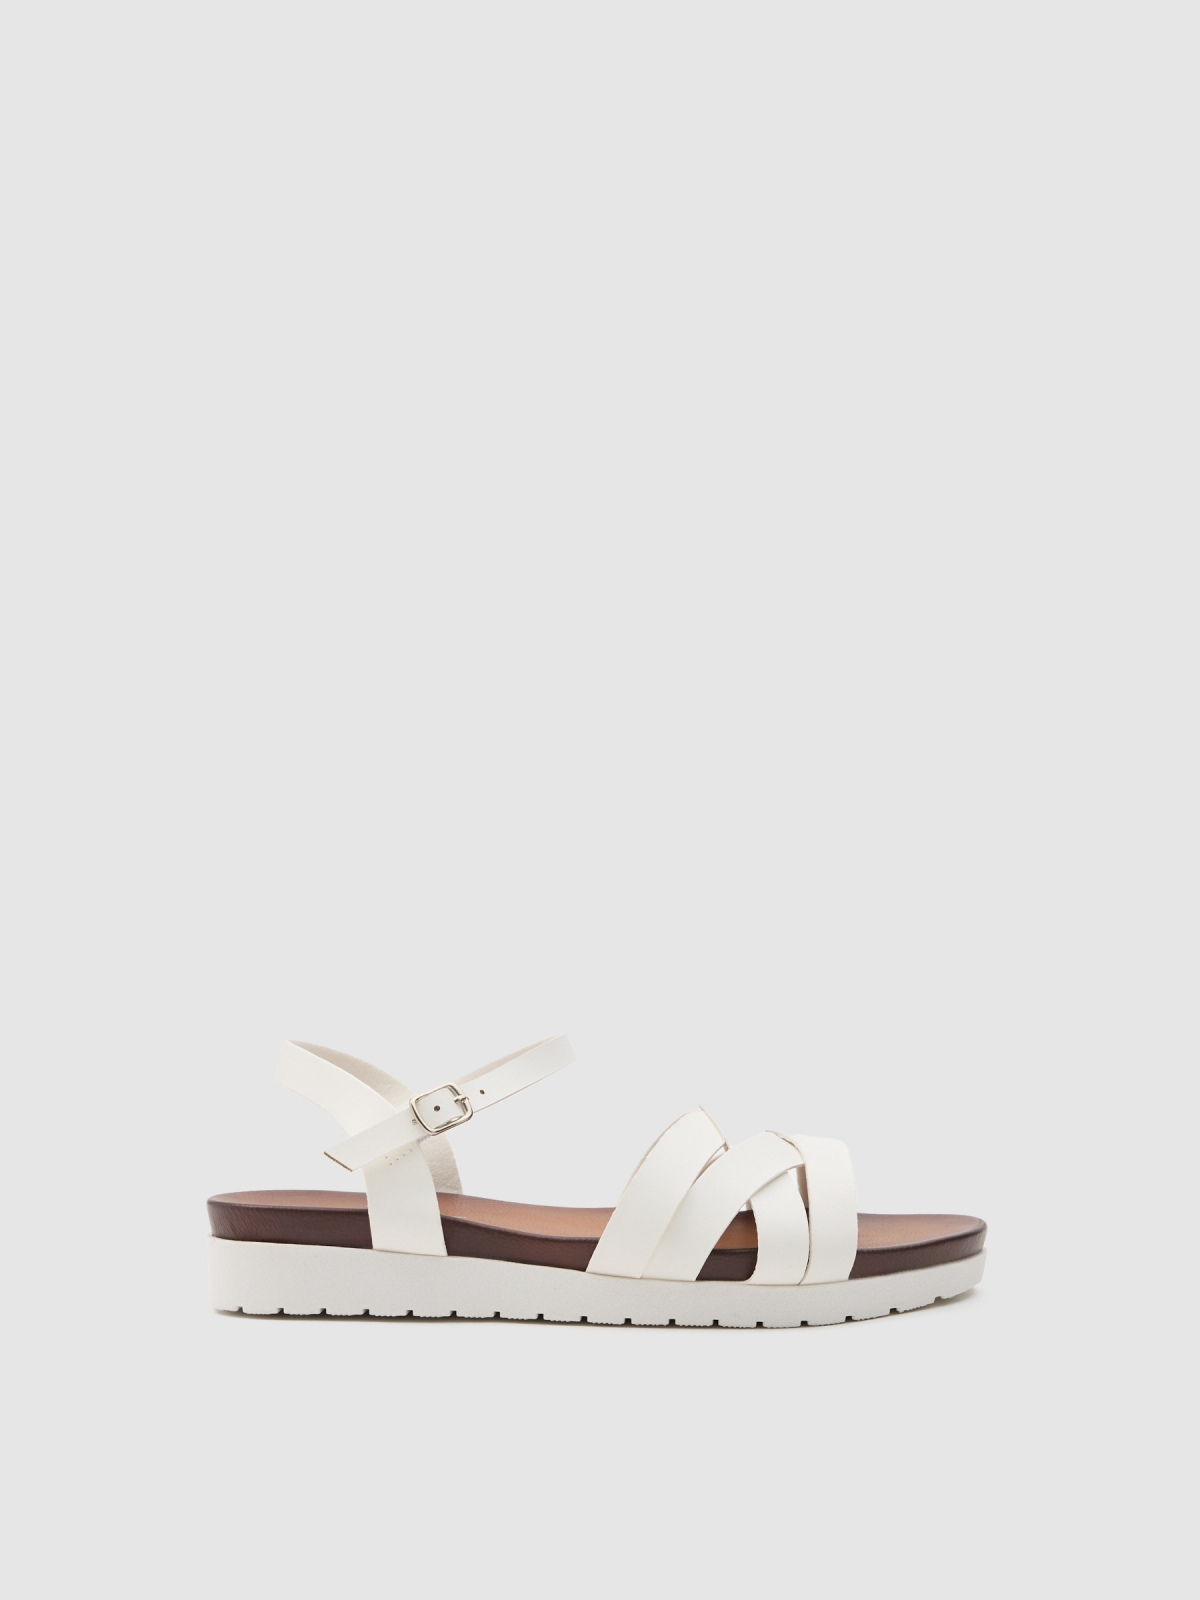 Crossed sandals white